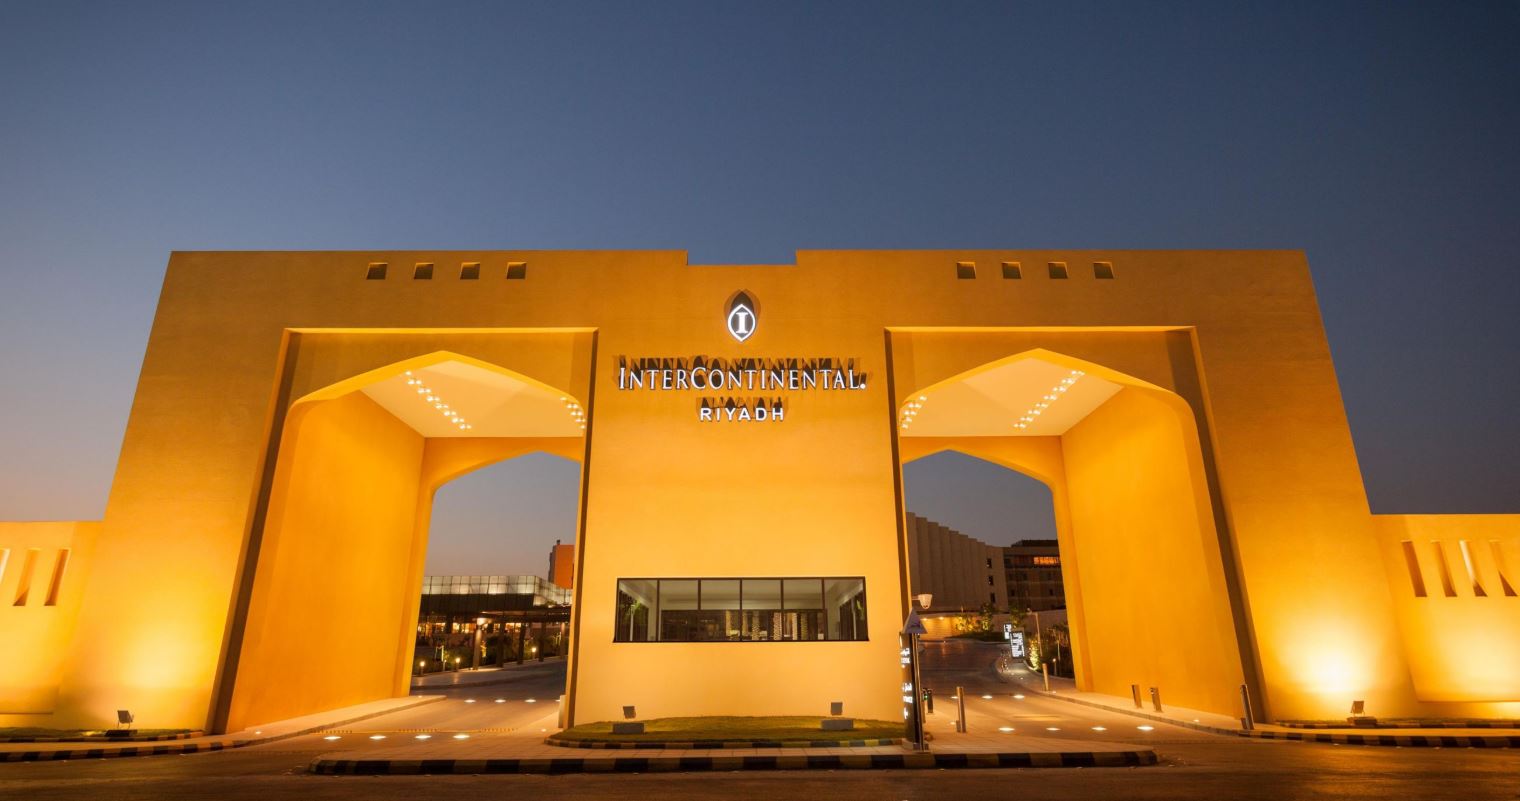 InterContinental Riyadh